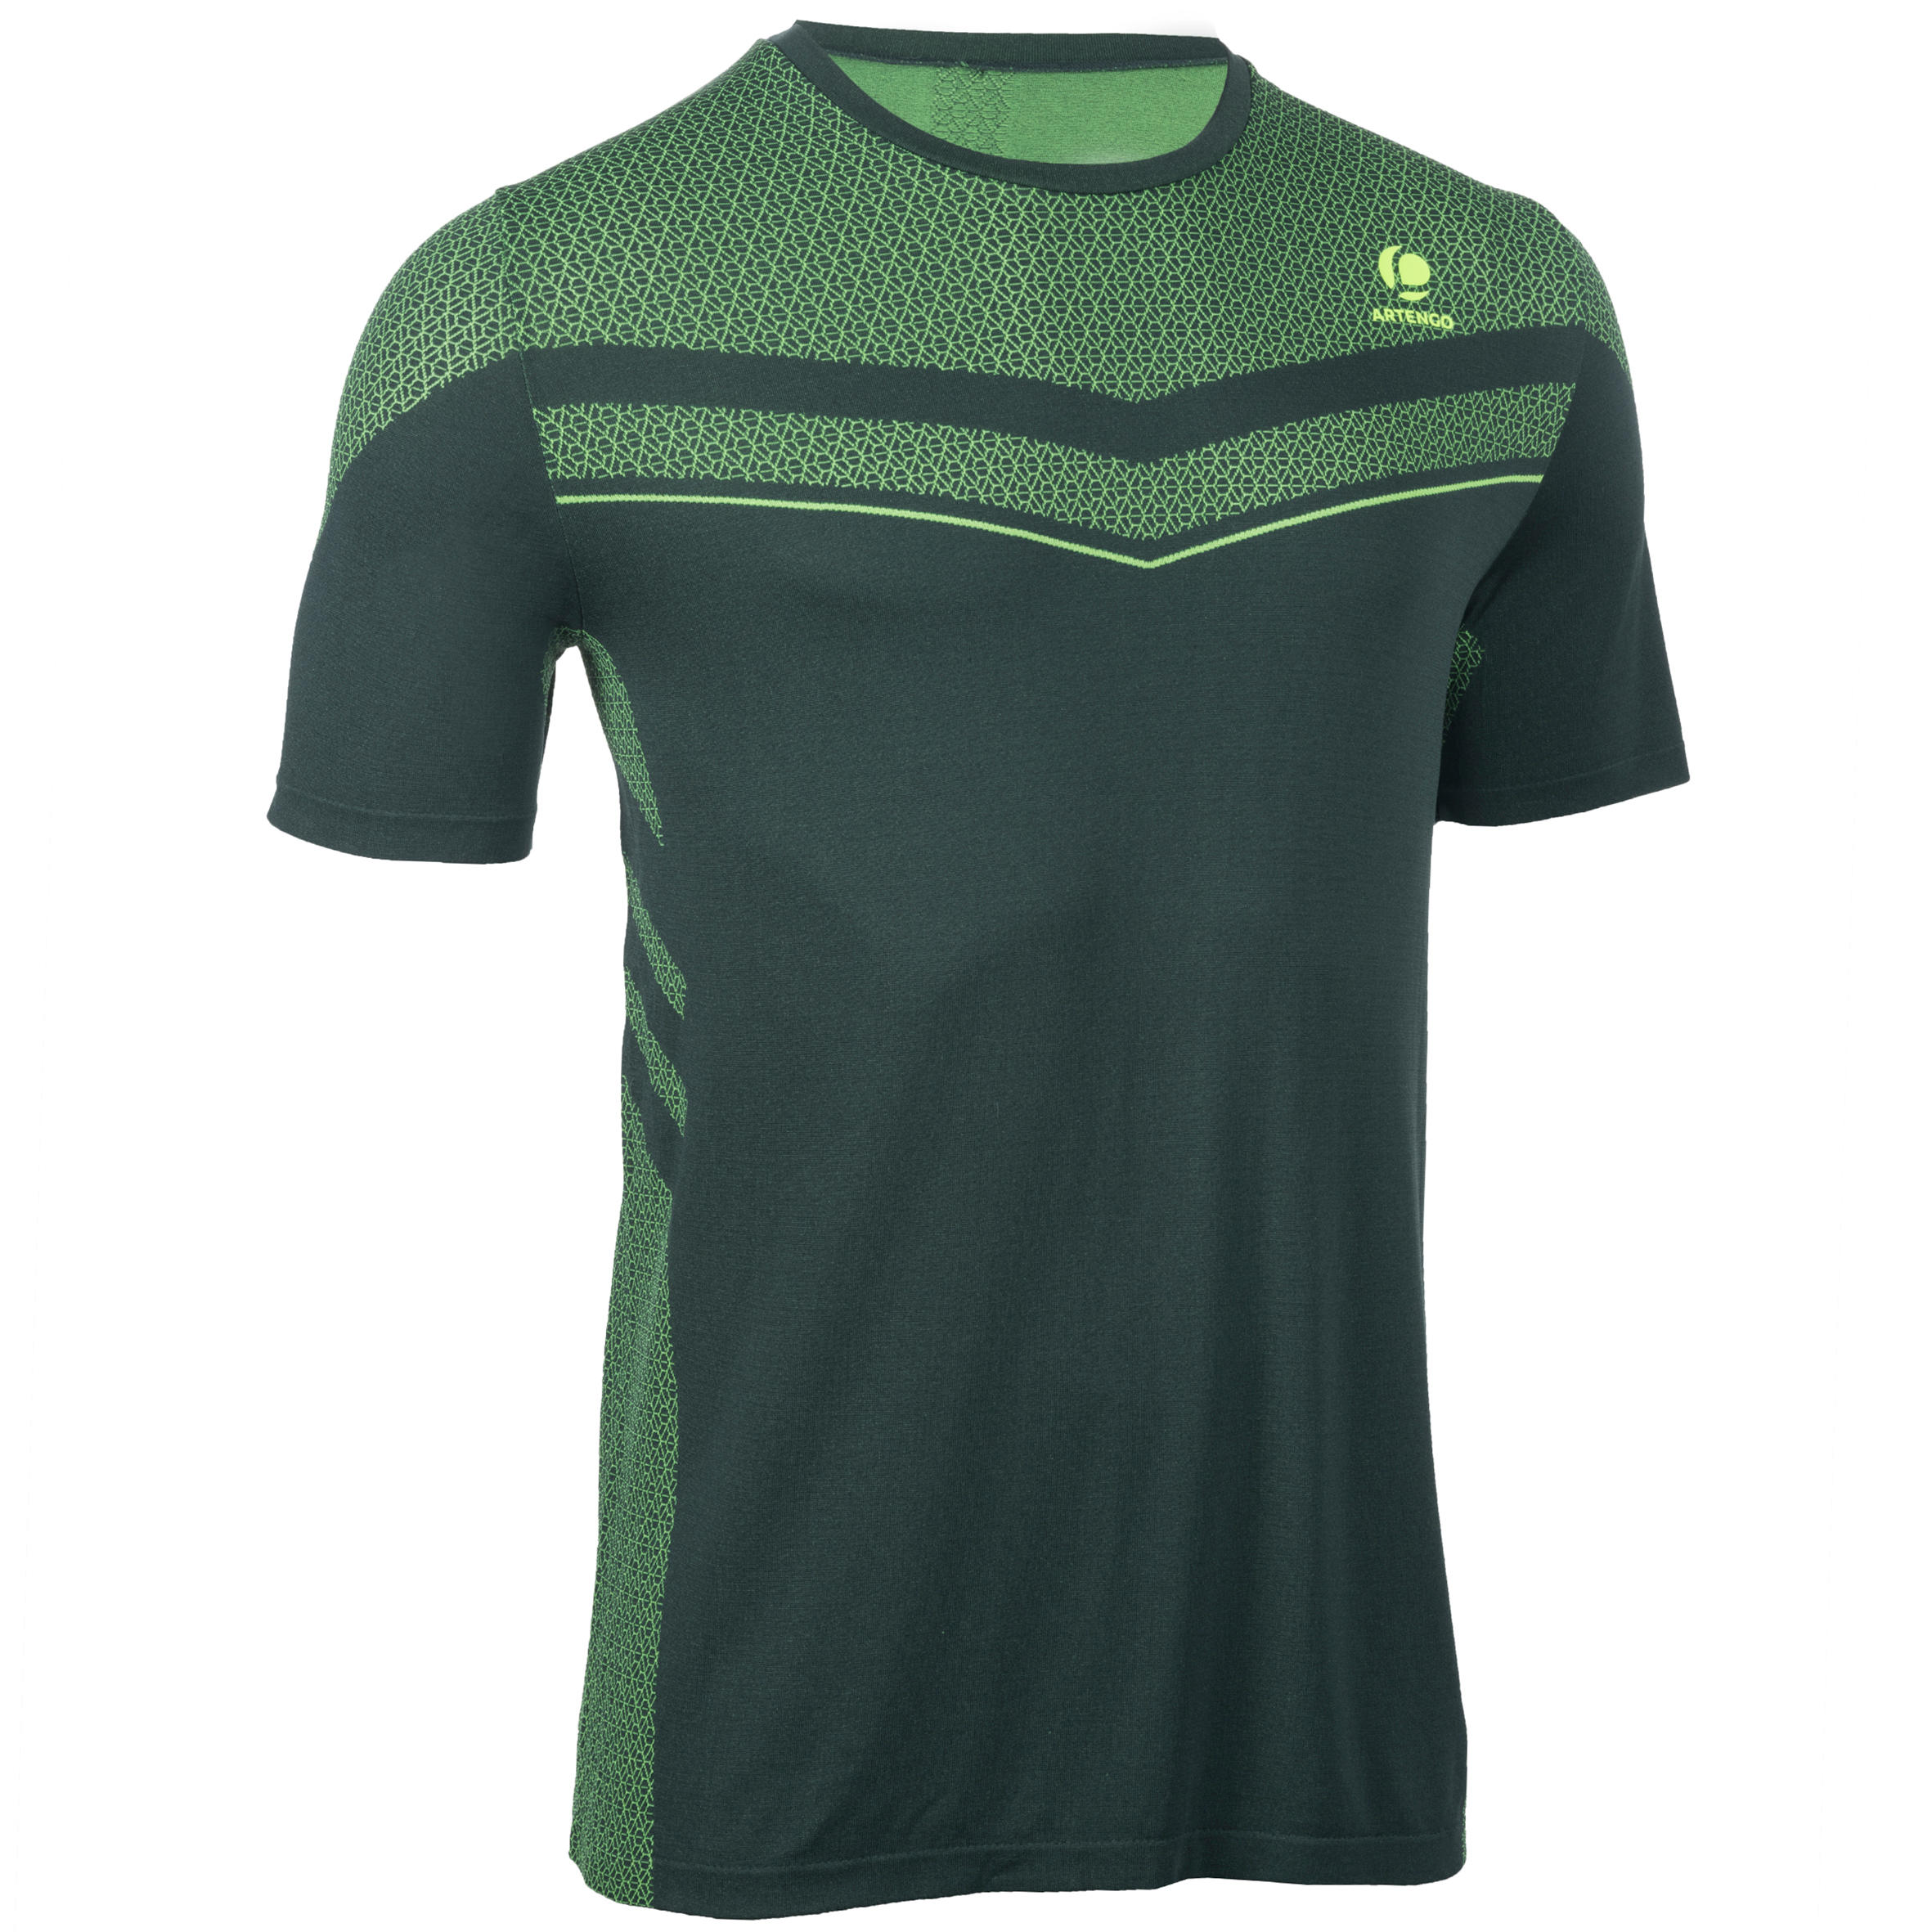 Light 990 Tennis T-Shirt - Khaki